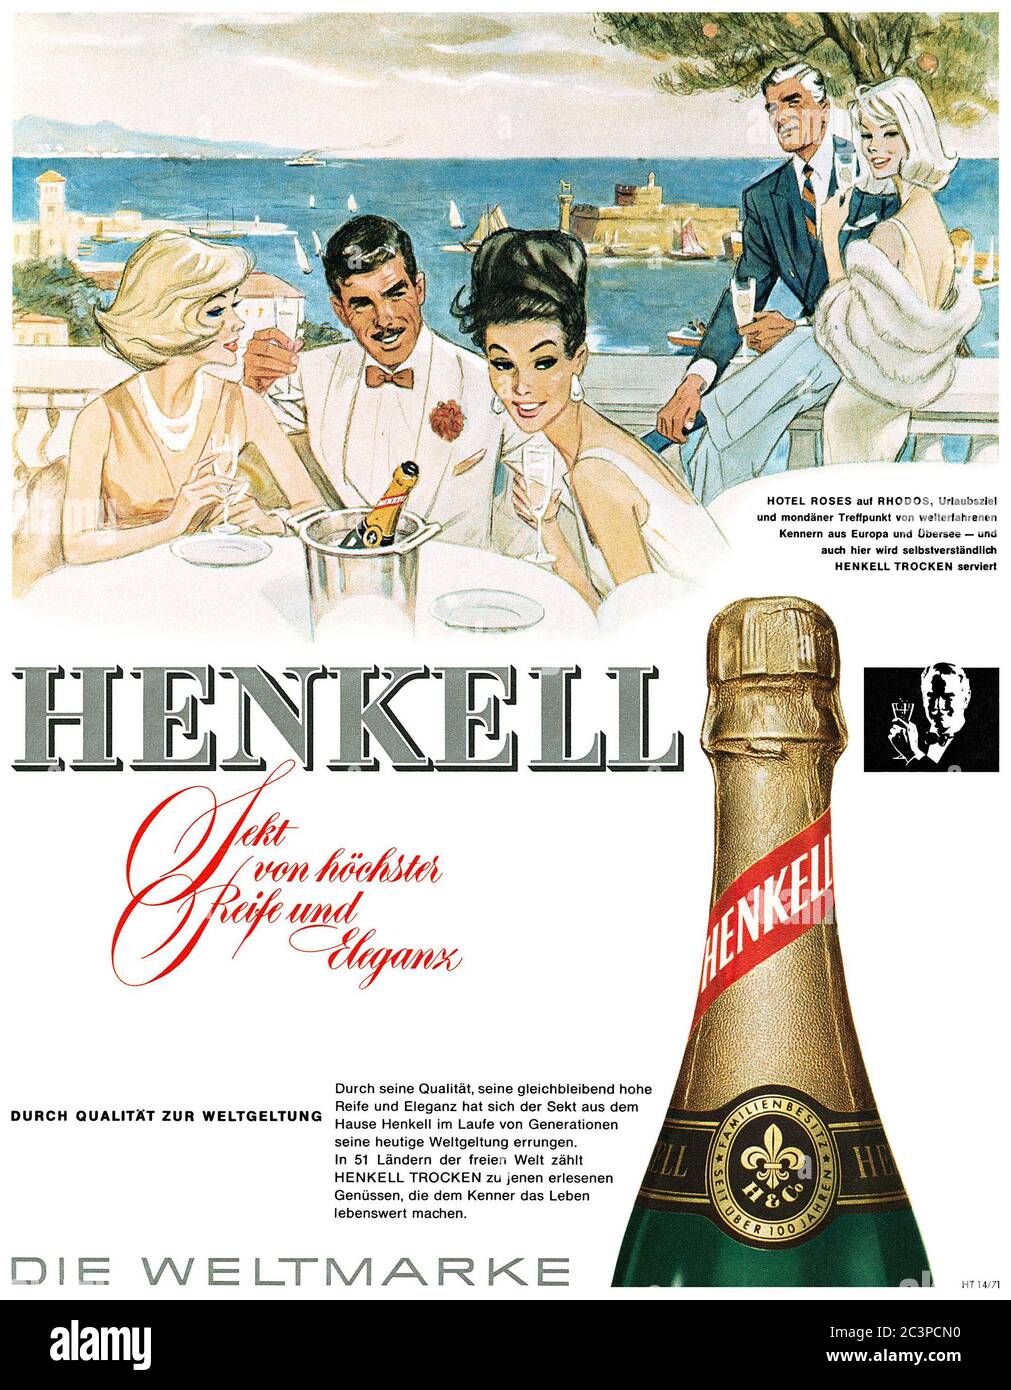 1964 German advertisement for Henkell sekt (sparkling wine). Stock Photo